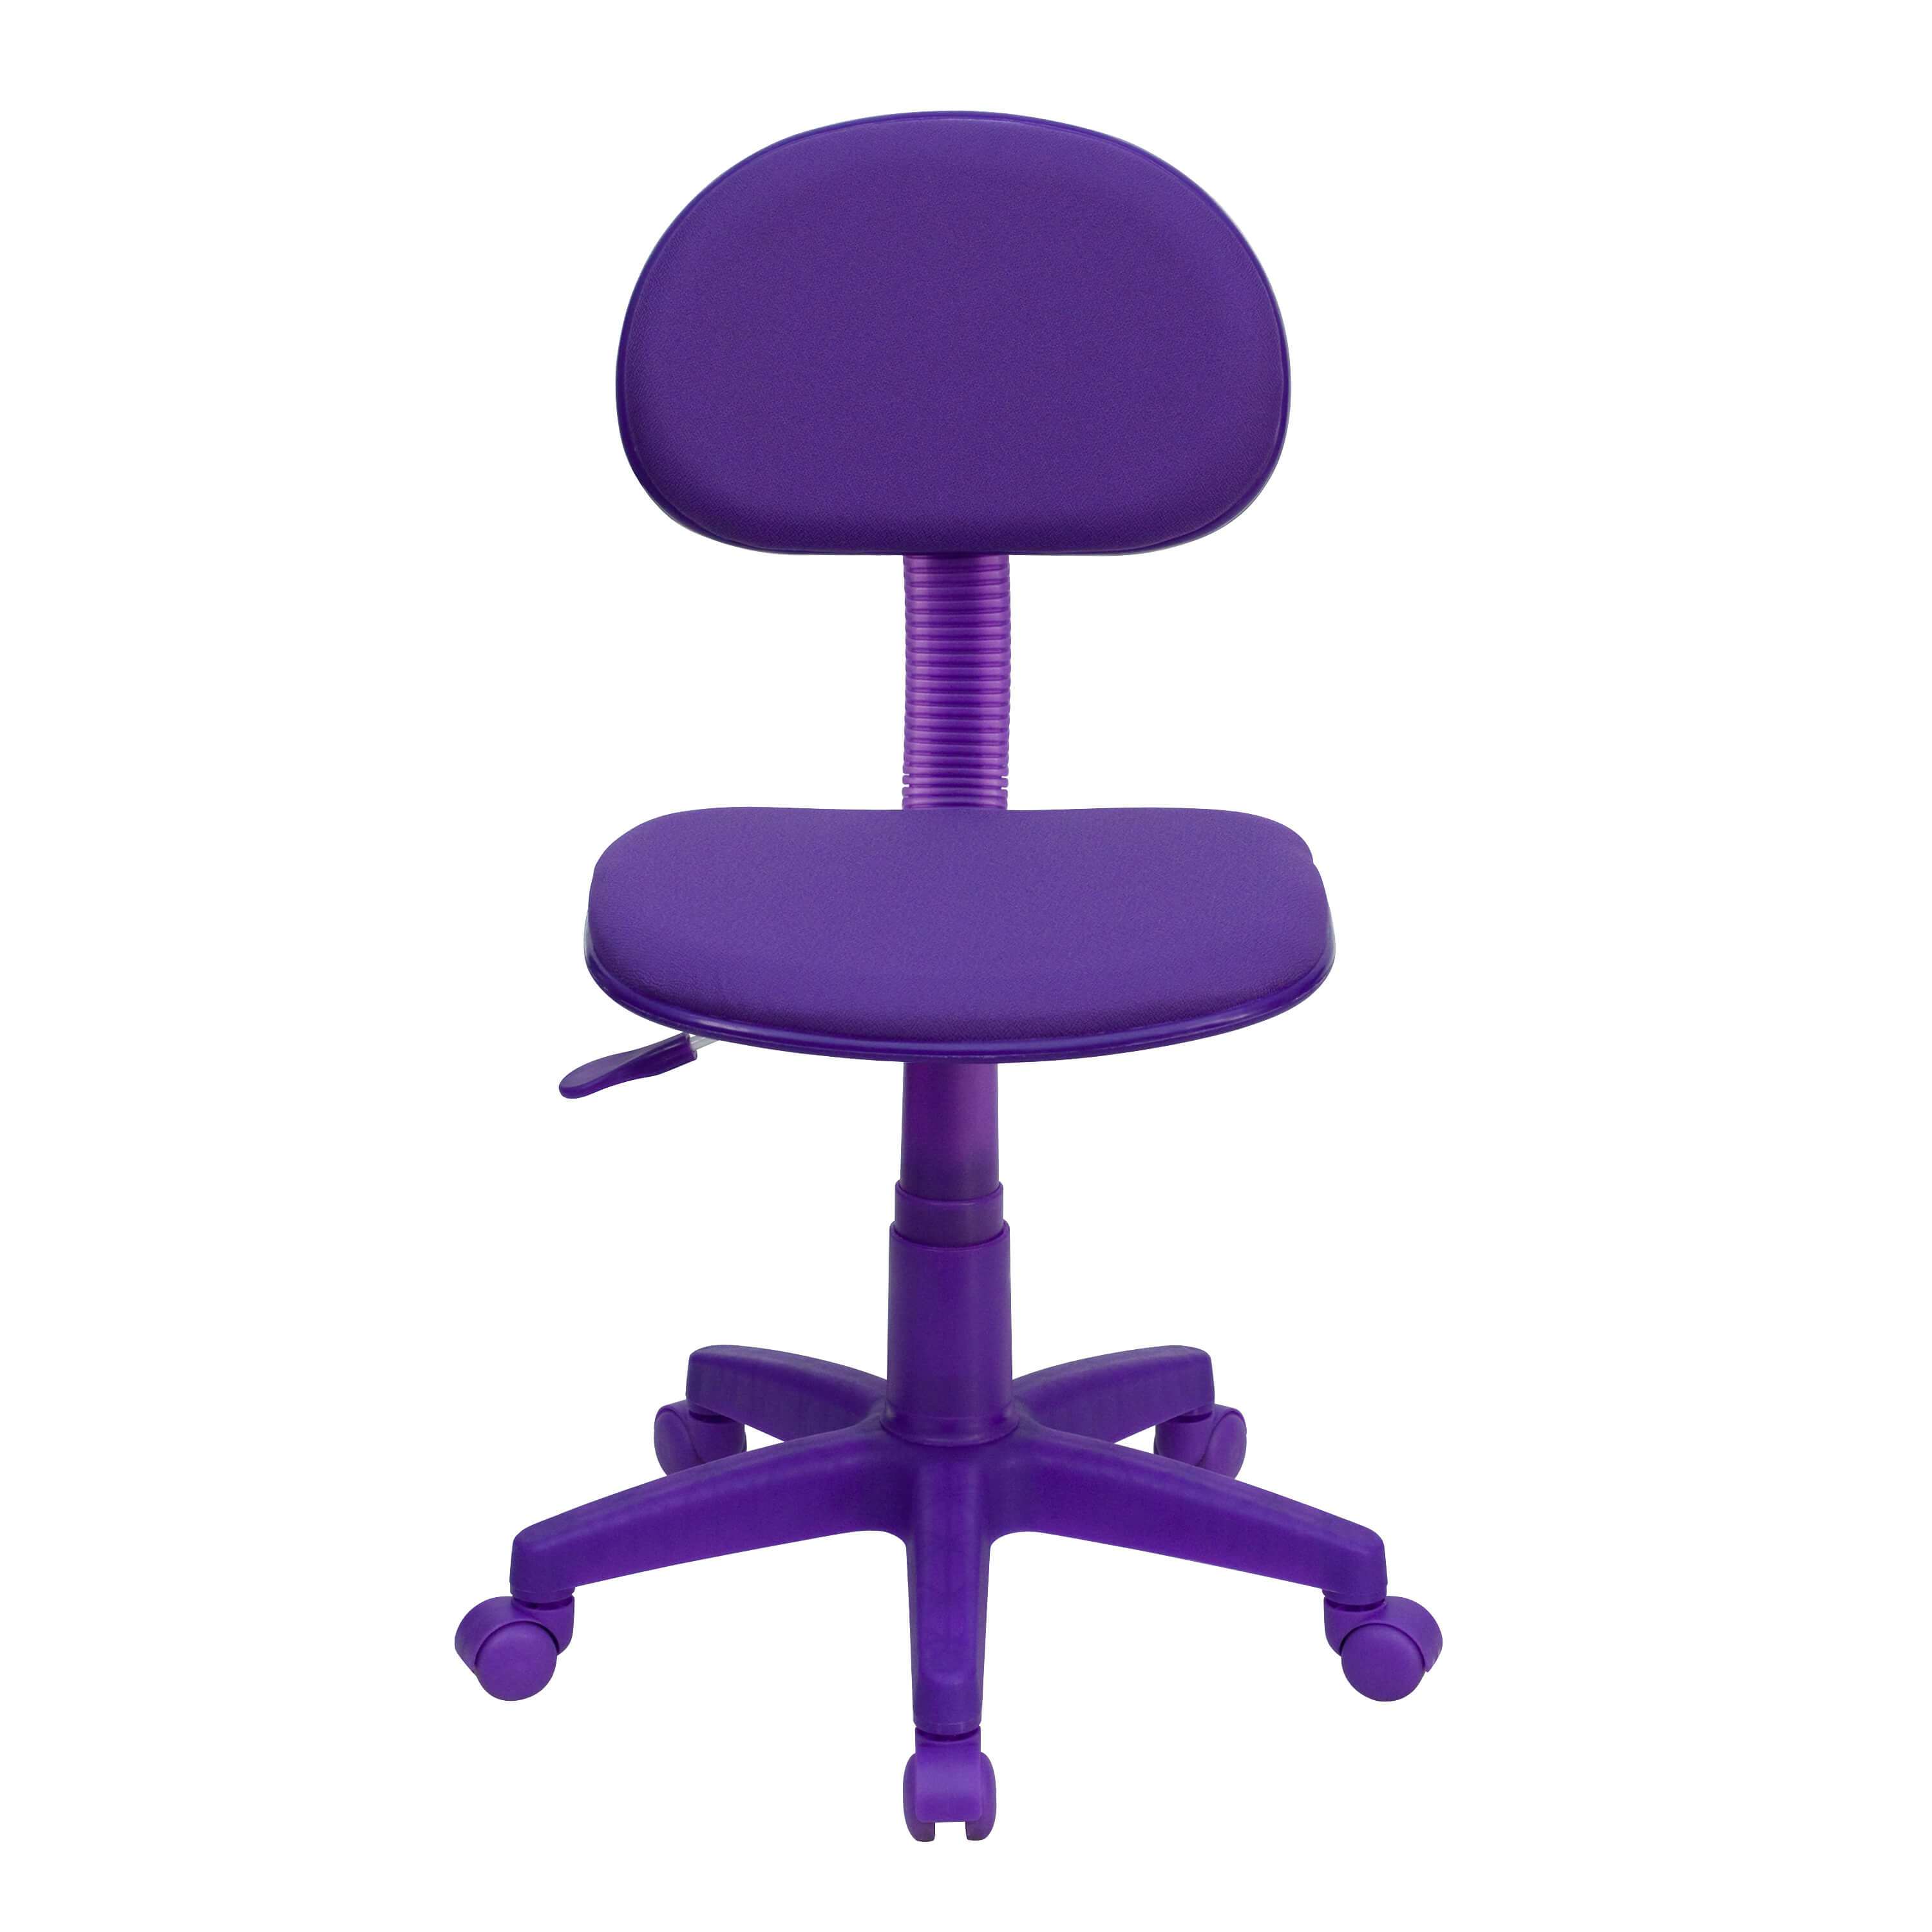 Colorful desk chairs CUB BT 698 PURPLE GG FLA